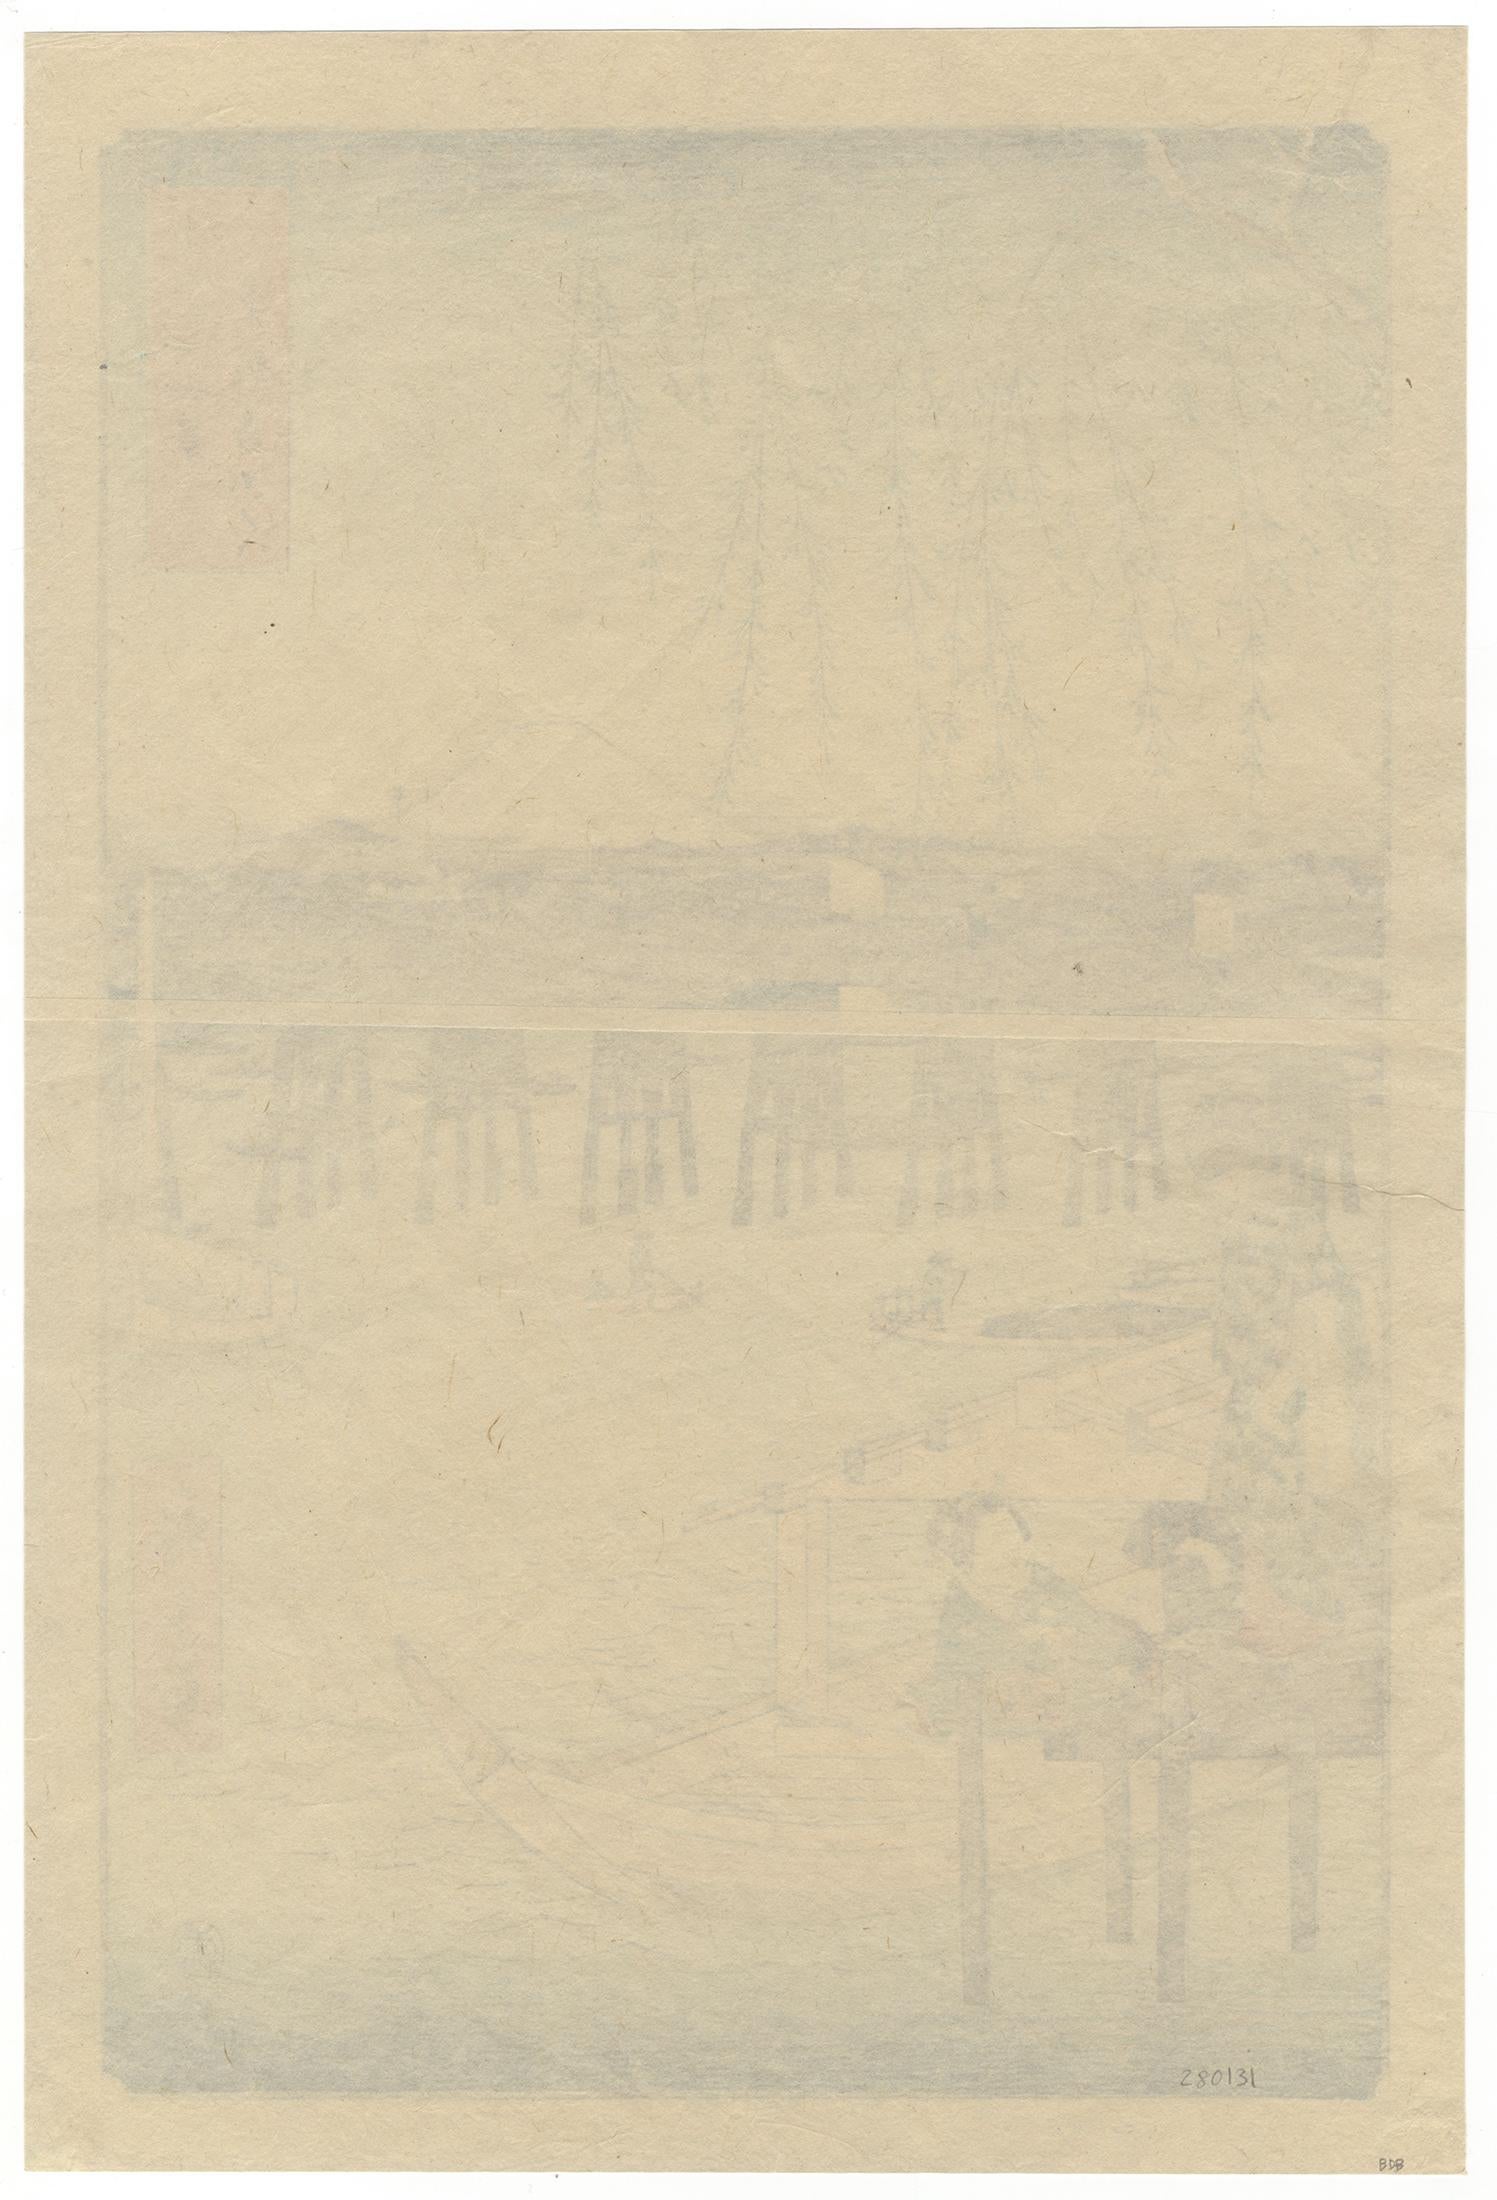 Artist: Ando Hiroshige I (1797–1858)
Title: 6. Ryogoku in the Eastern Capital 
Series: Thirty Six Views of Mt. Fuji
Publisher: Sanoya Kihei
Date: 1852
Dimensions: 25 x 36.7 cm

Long, long – the Ryogoku Bridge is long.
Had you gone there to